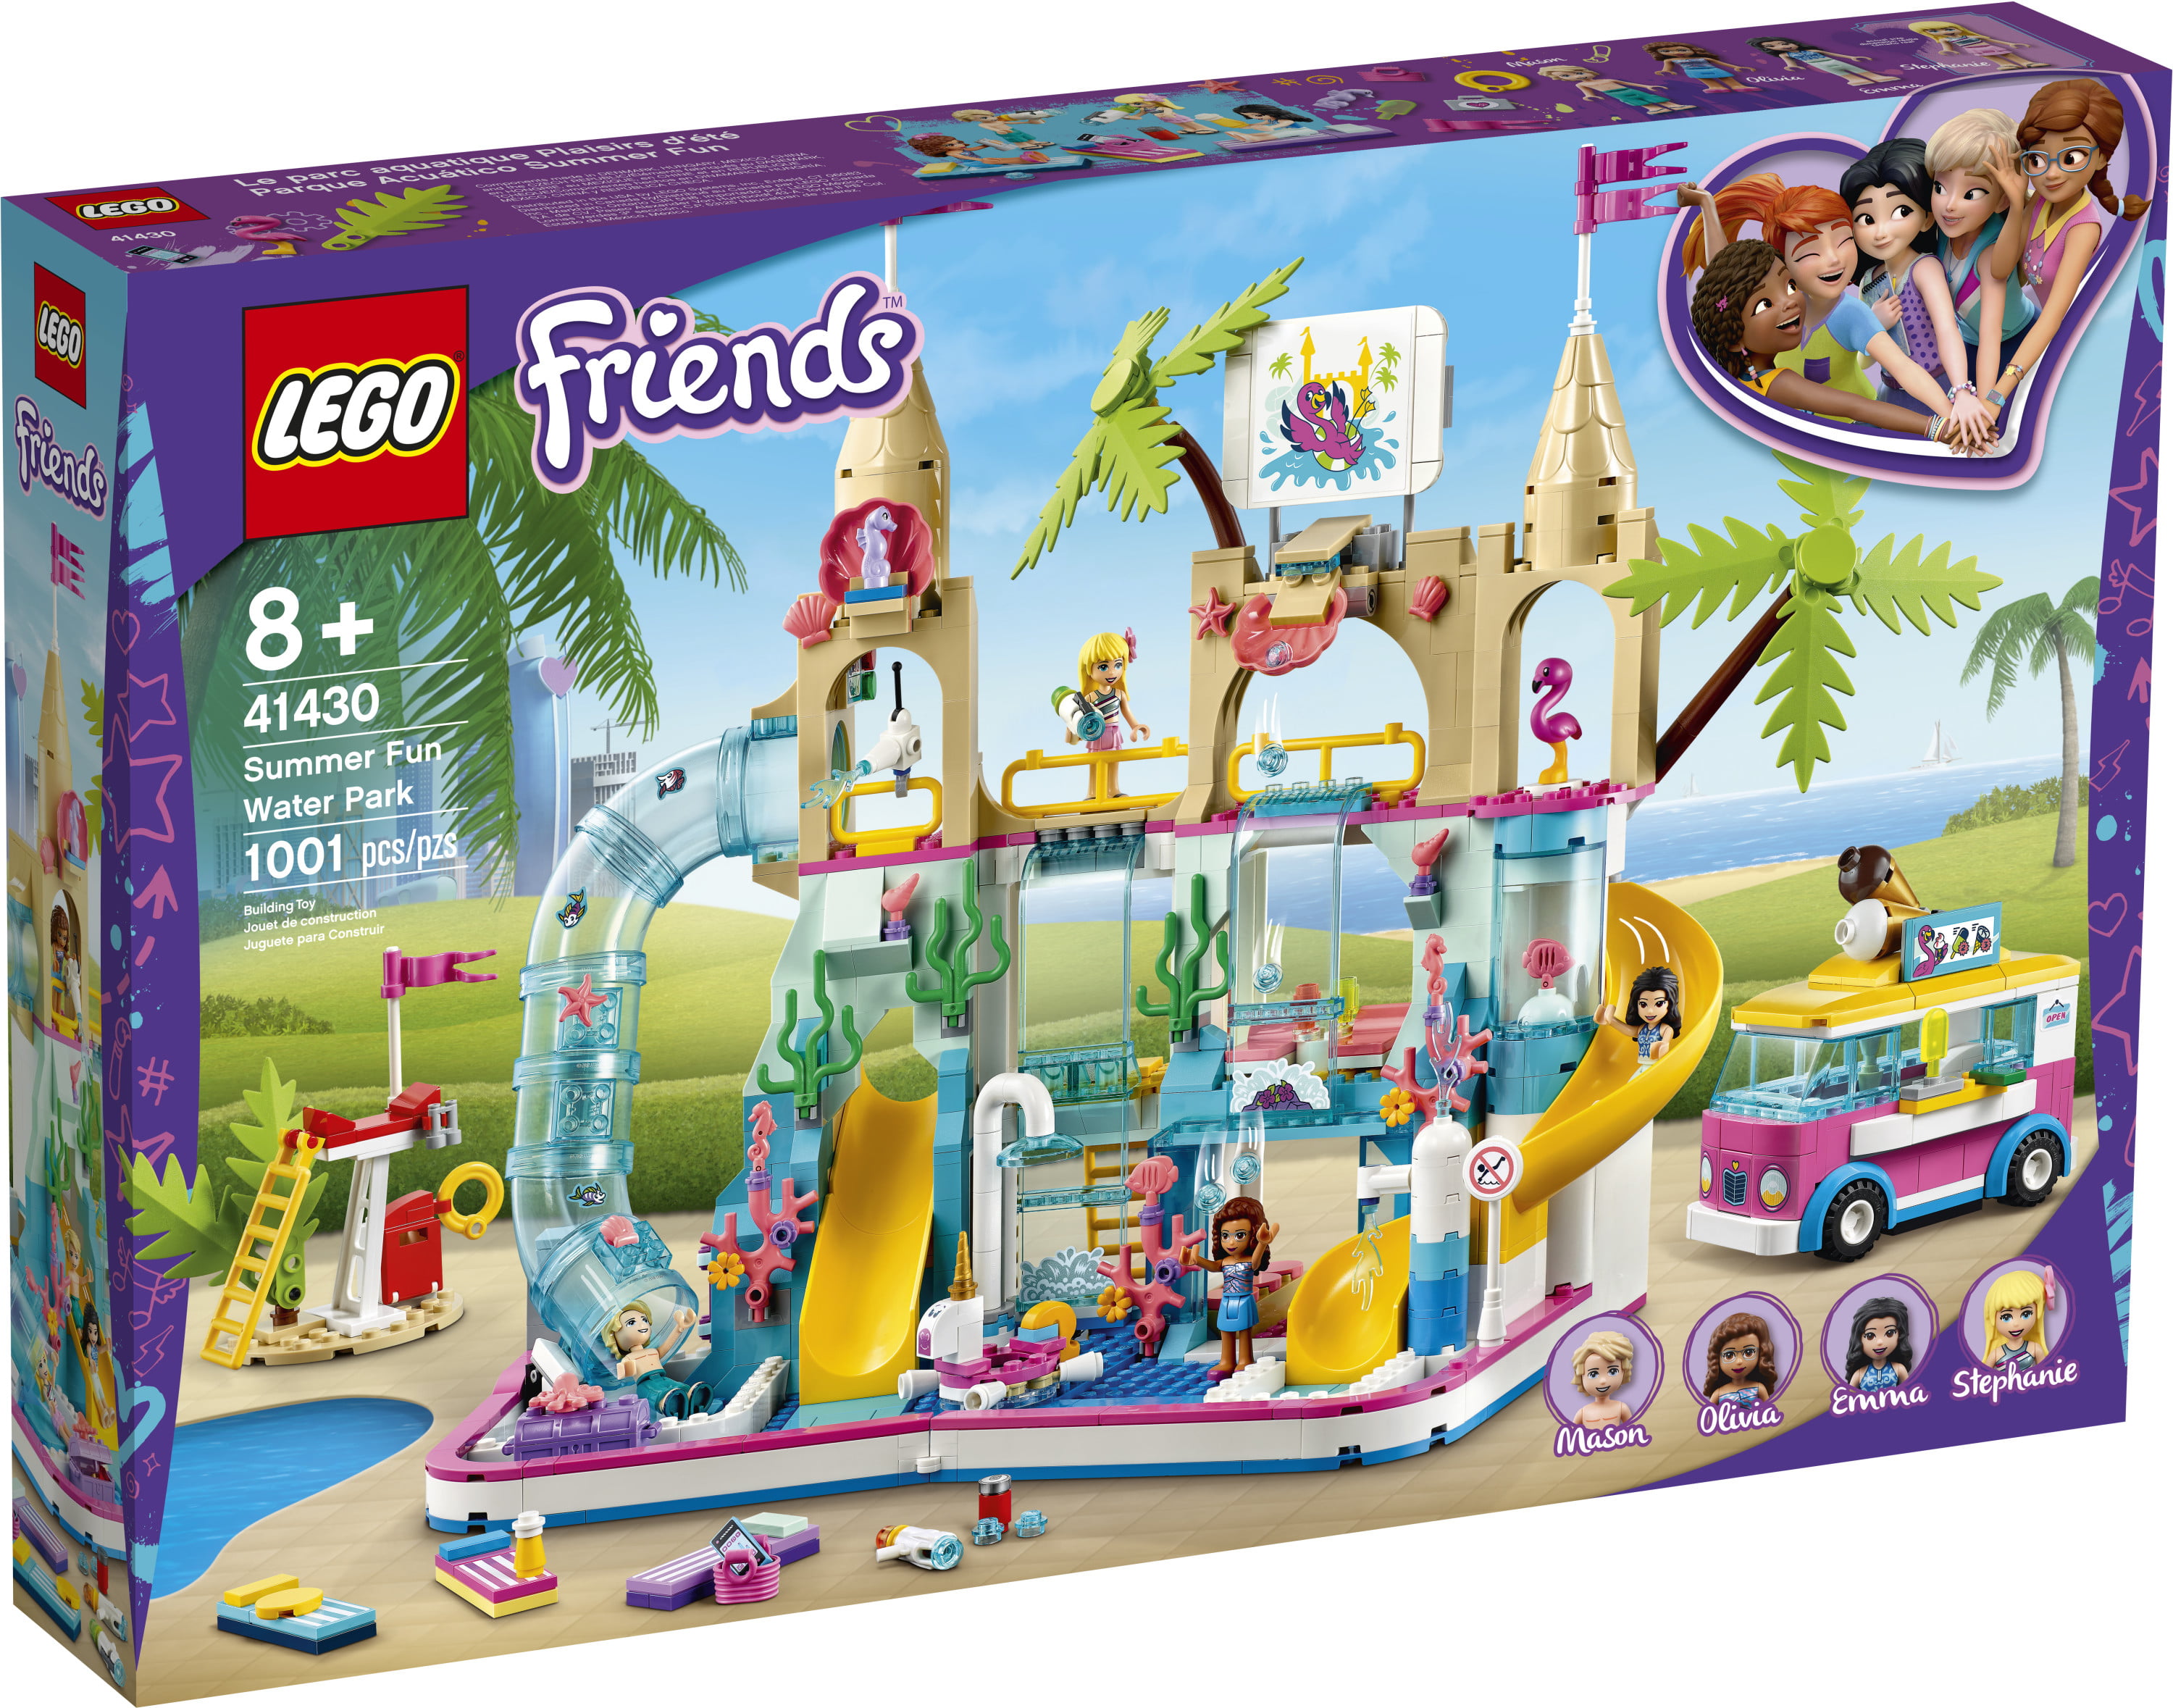 Skal Håndværker Engager LEGO Friends Summer Fun Water Park Set 41430 Building Toy Inspires Hours of  Creative Play (1001 Pieces) - Walmart.com